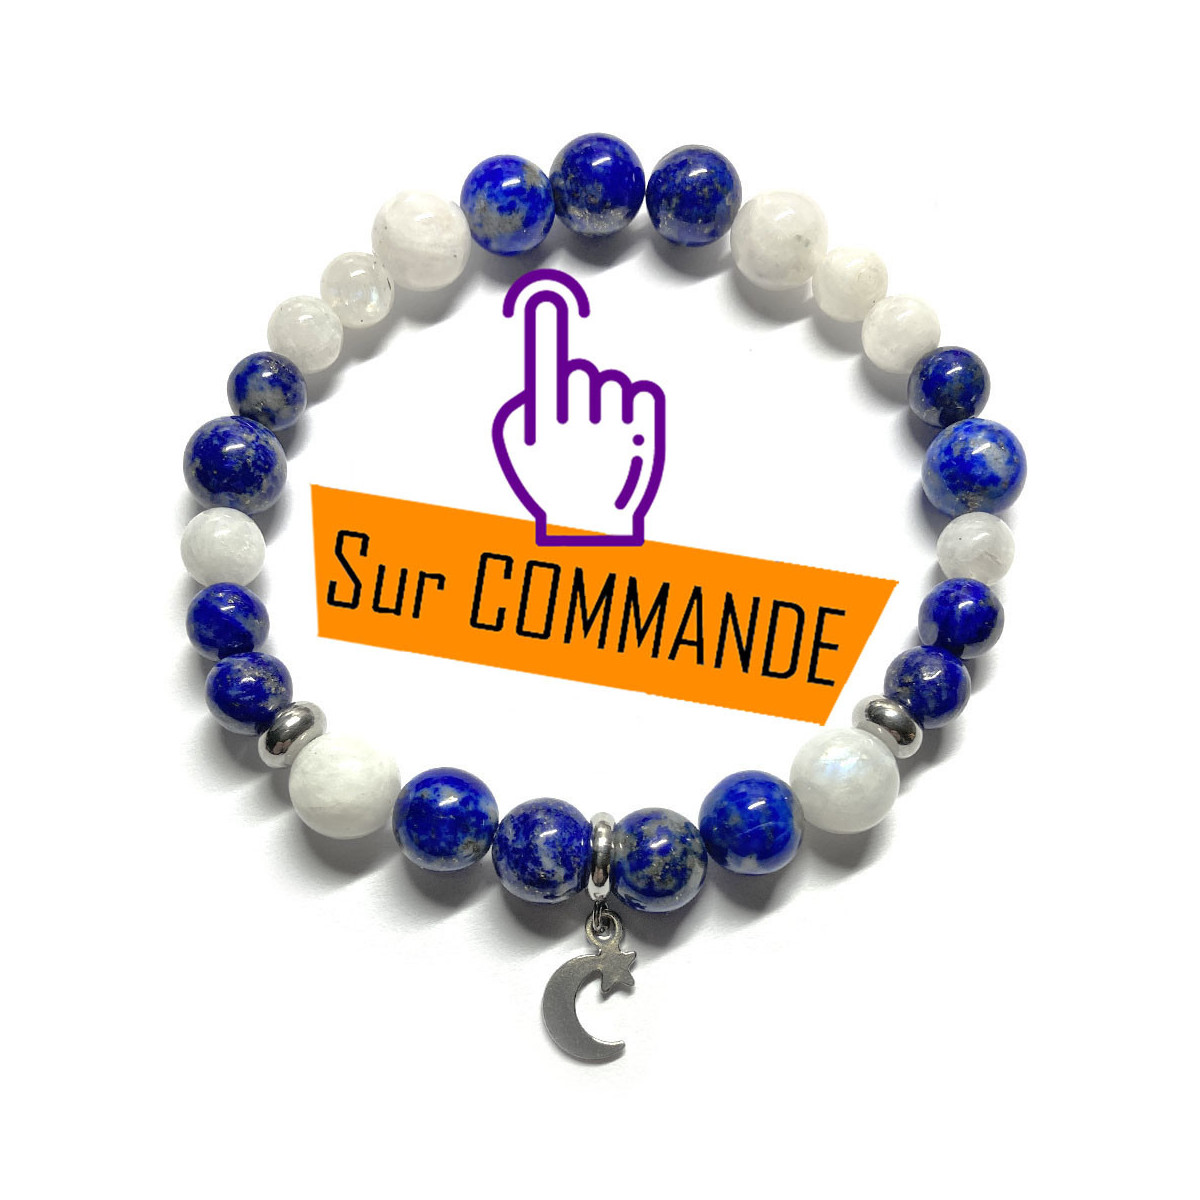 Bracelet Pierre de Lune & Lapis-Lazuli